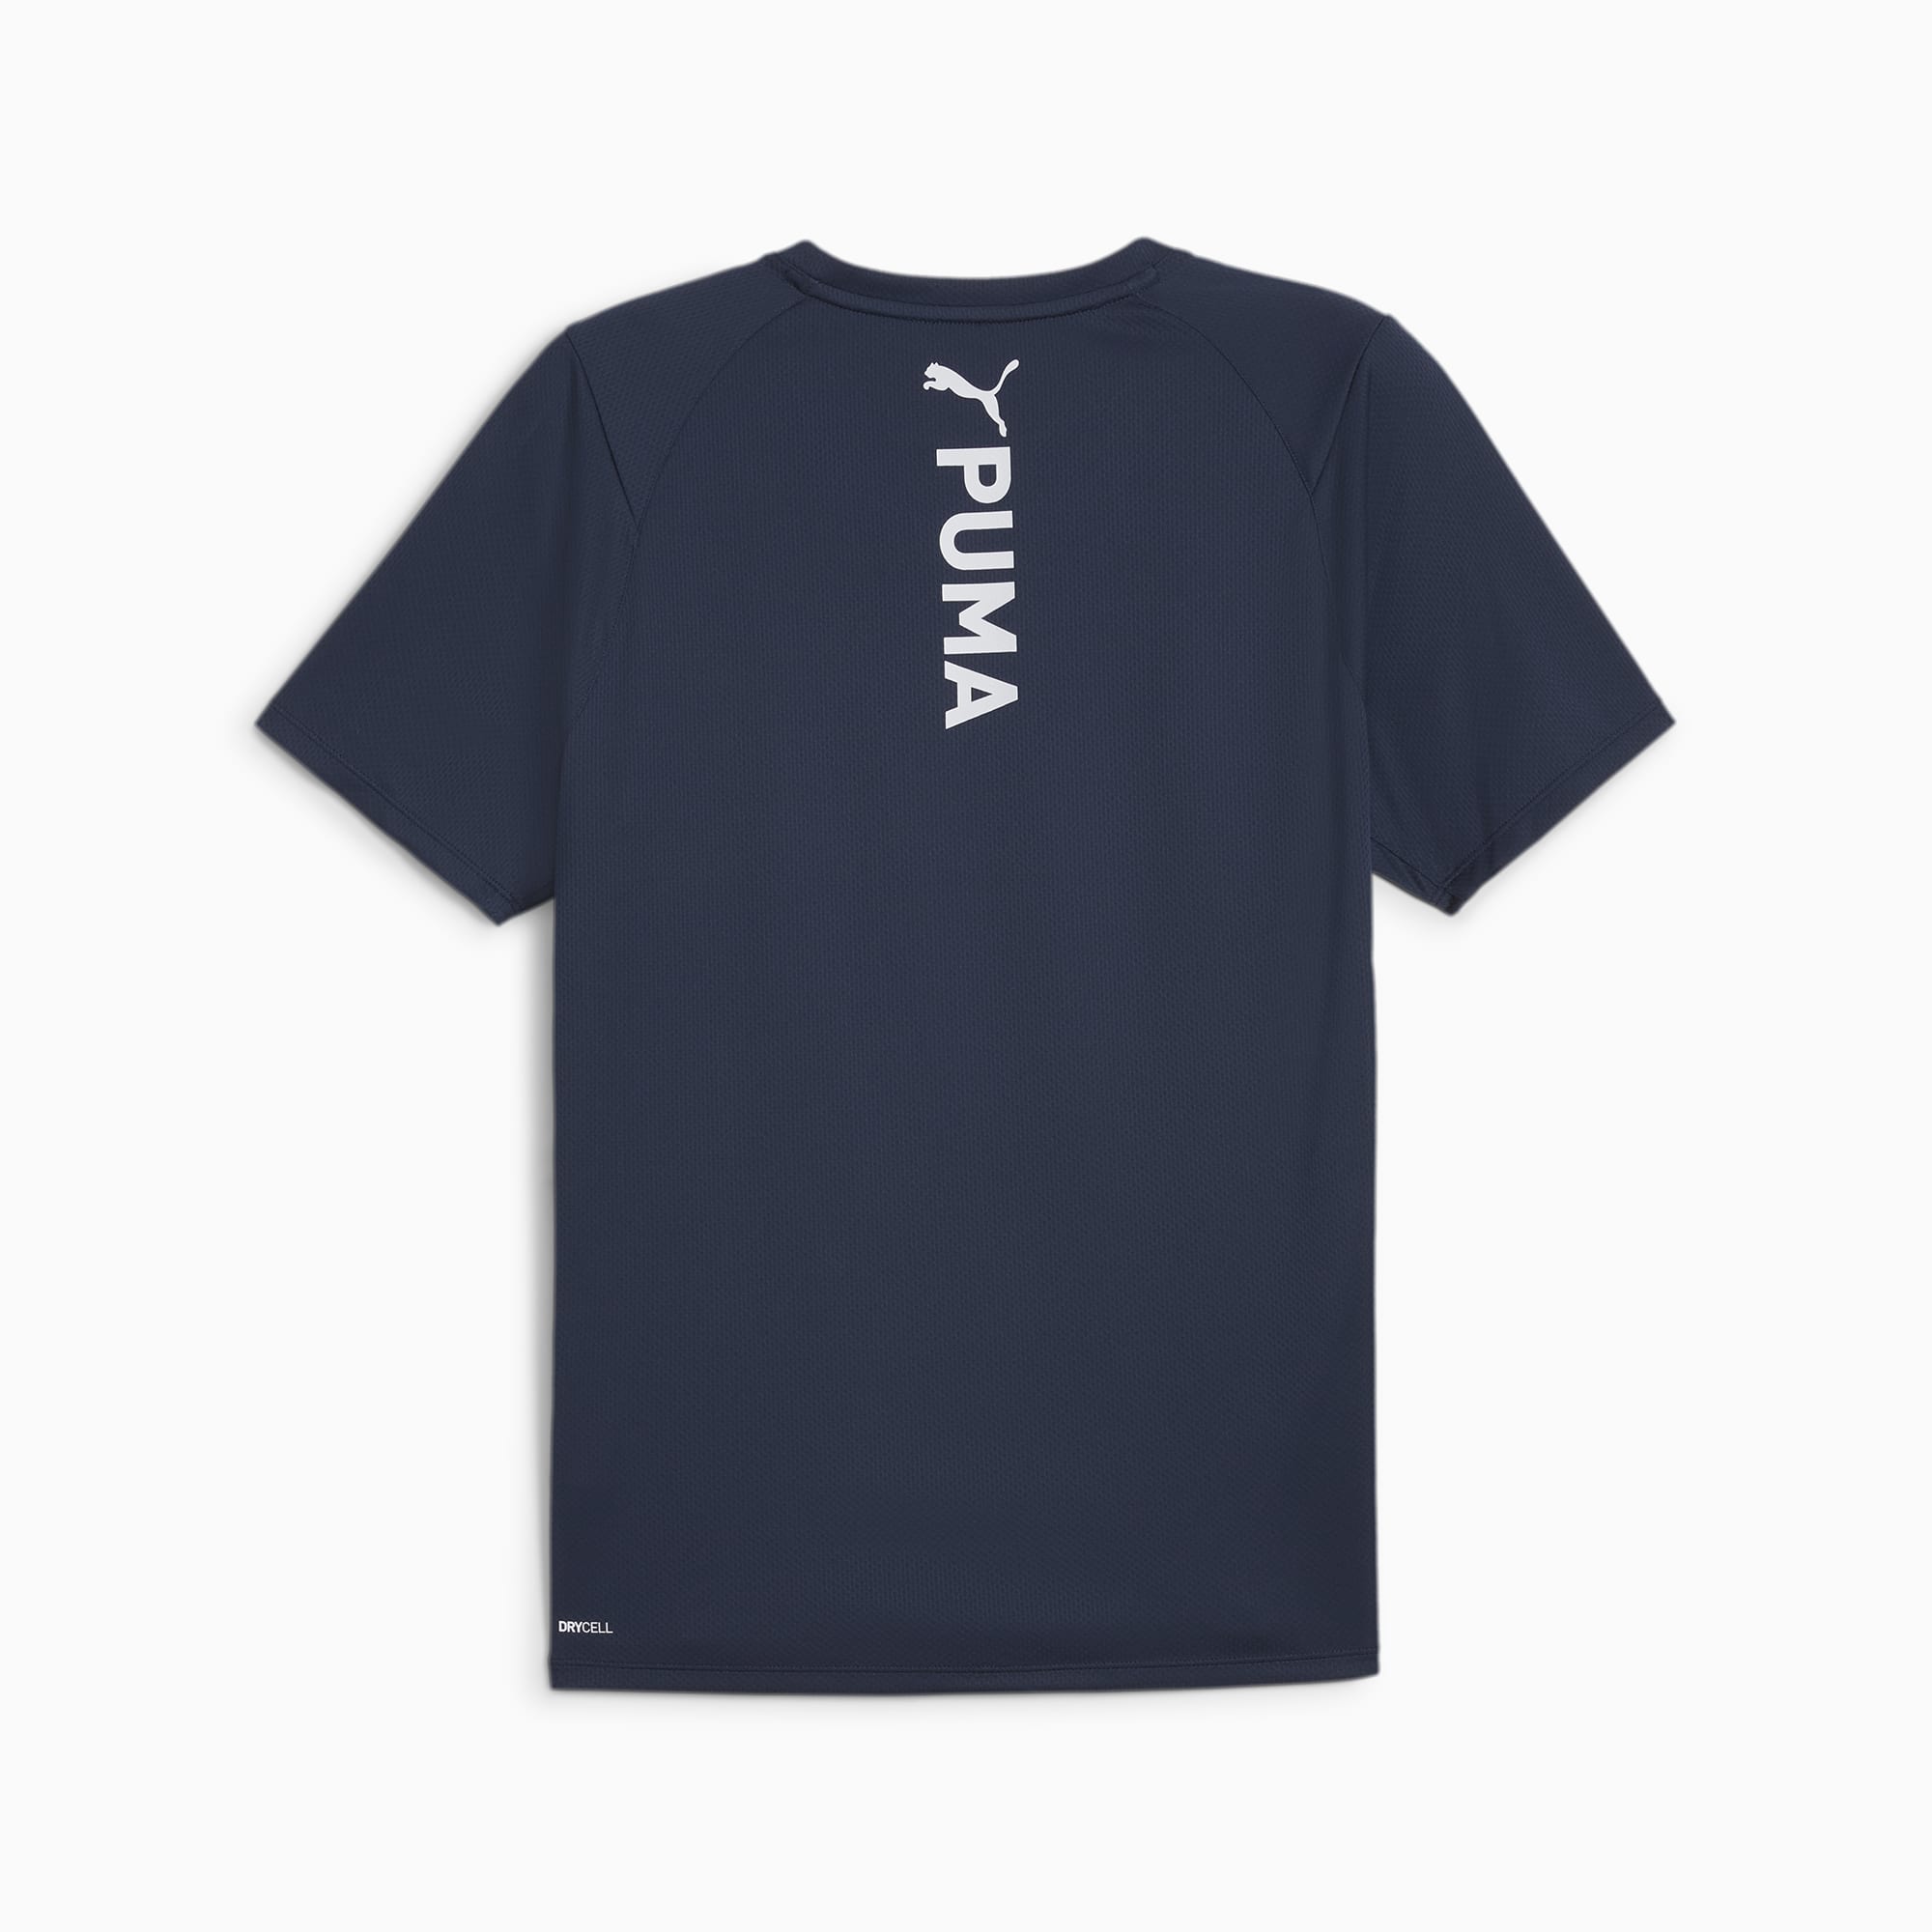 PUMA Fit Ultrabreathe Men's T-Shirt, Dark Blue, Size XS, Clothing